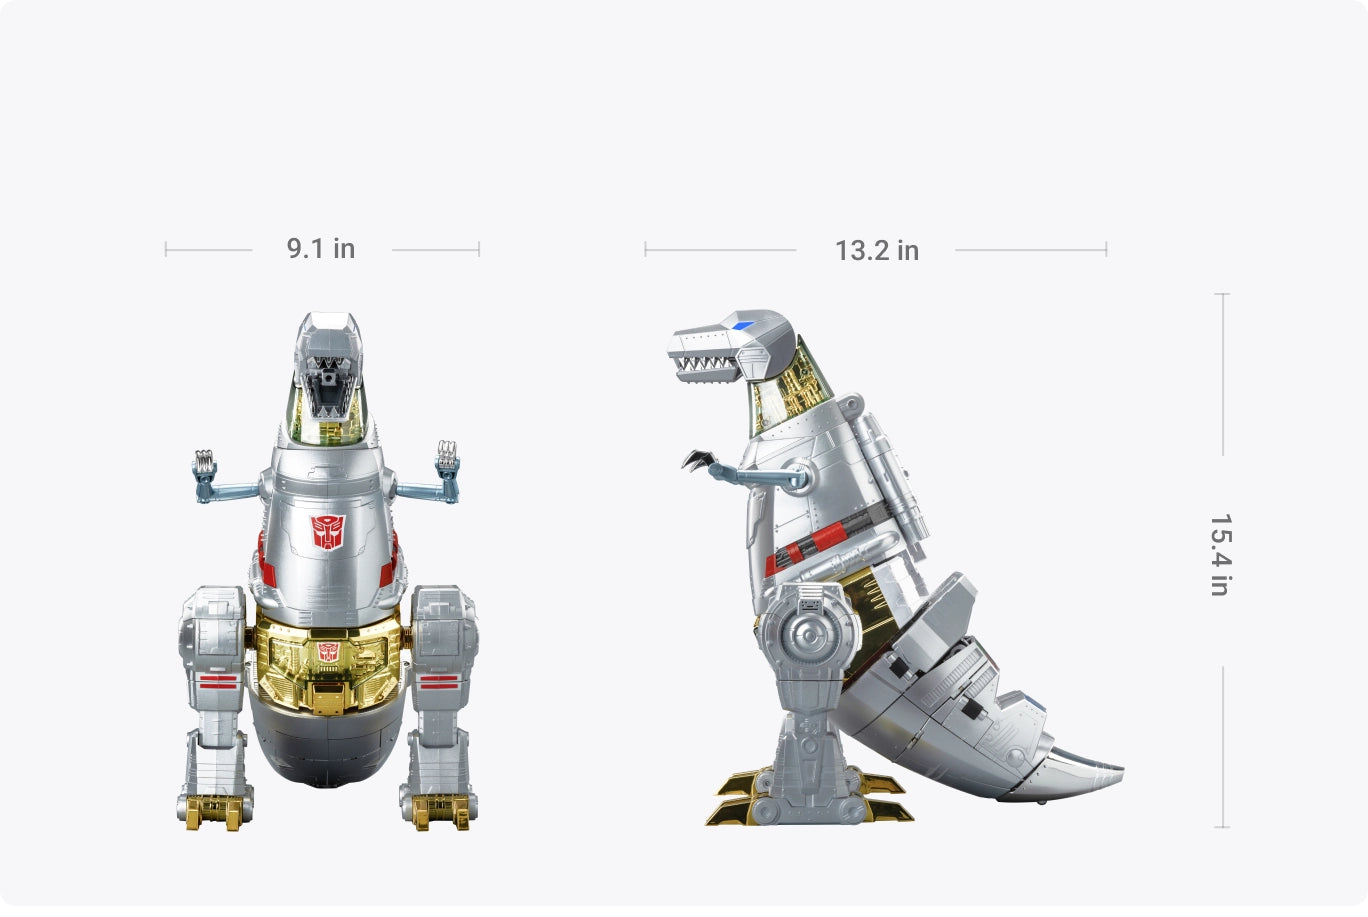 Robosen Transformers Grimlock Flagship Collector's Edition Auto-Converting Robot Figure